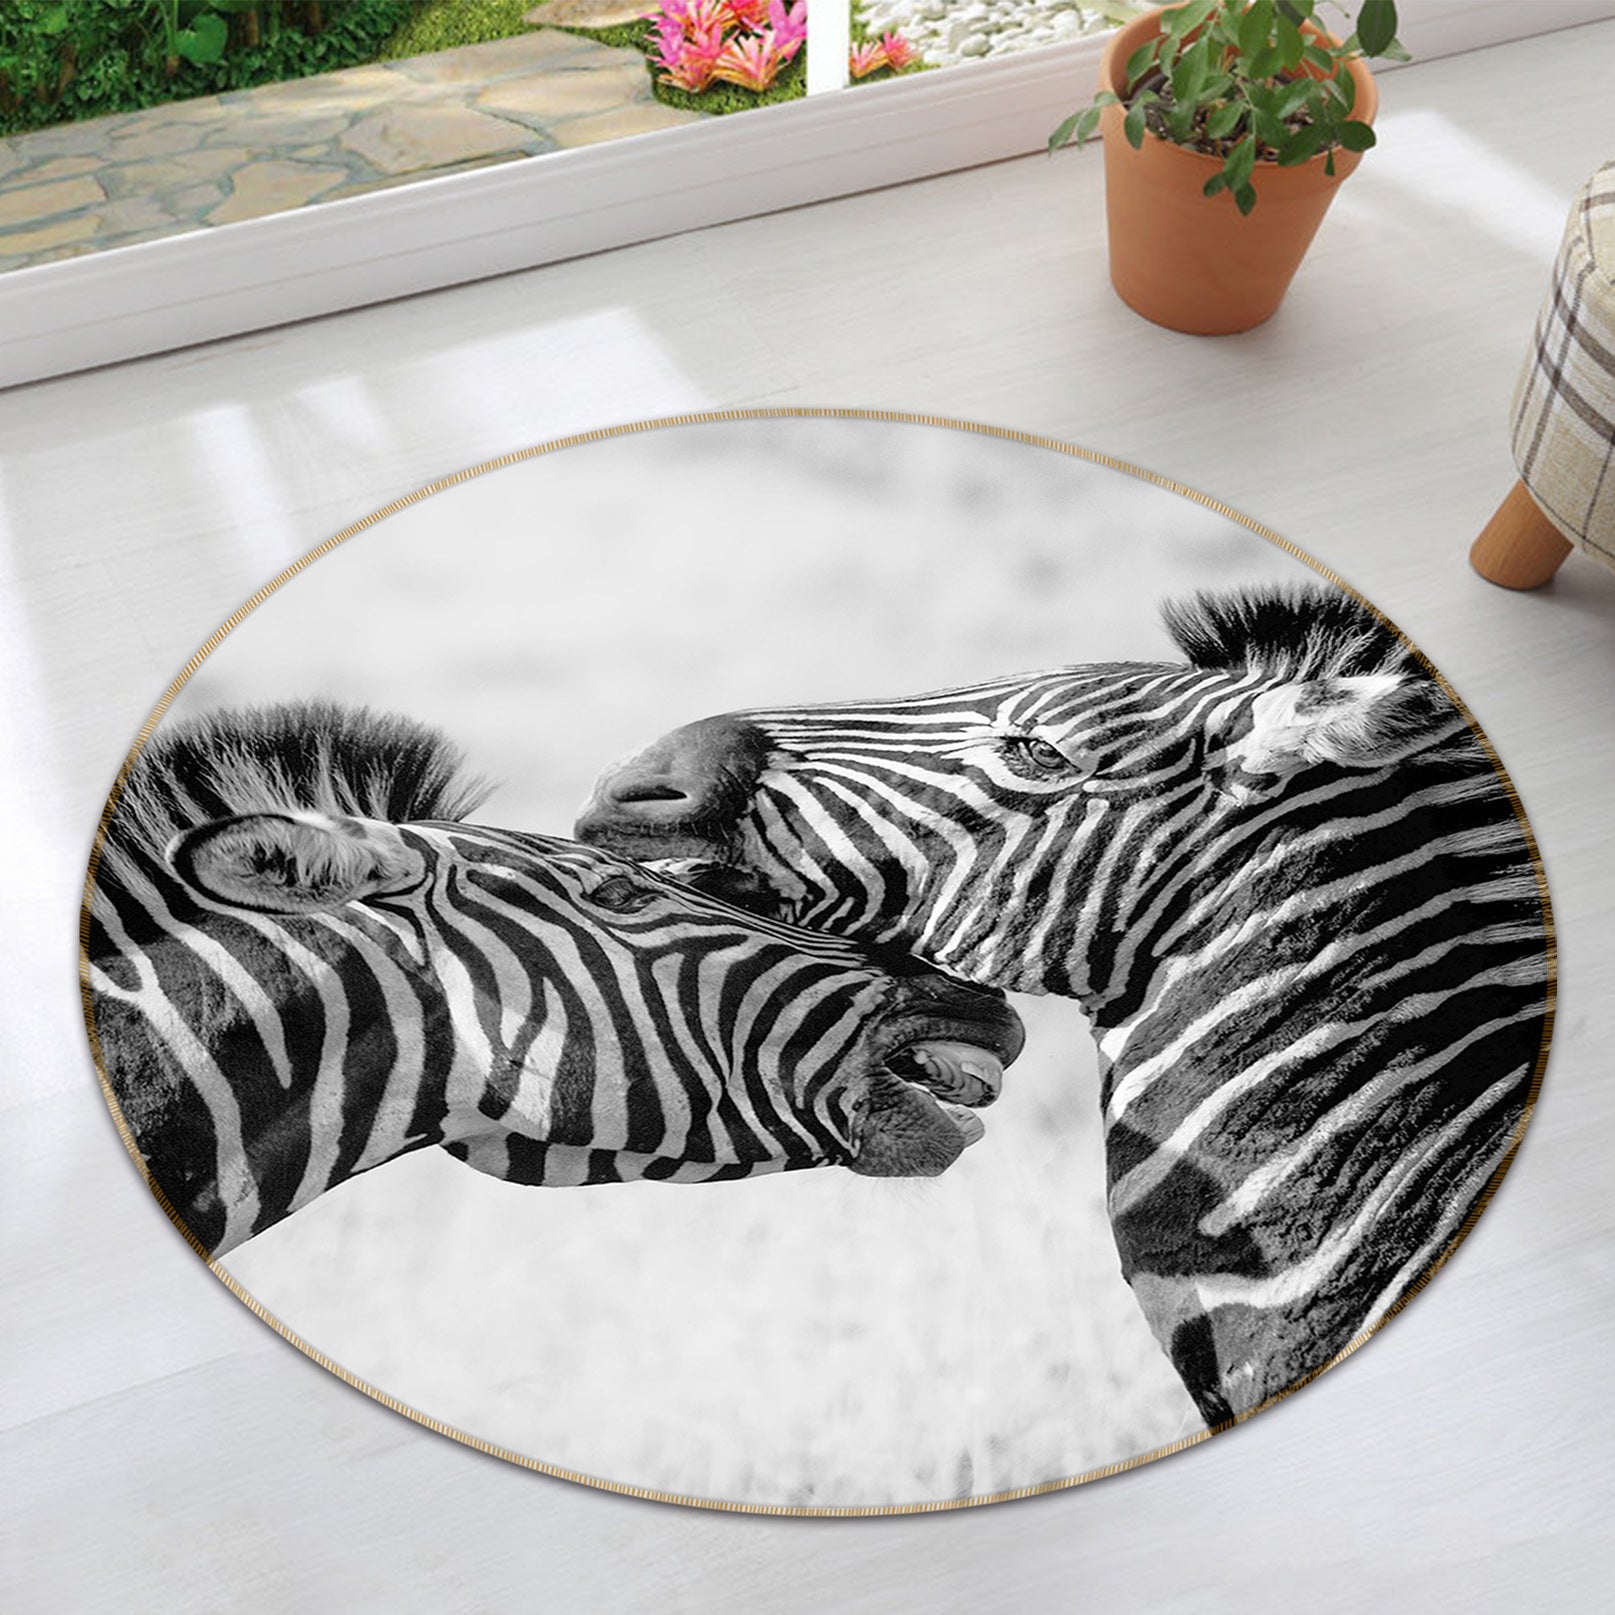 3D Zebras 82292 Animal Round Non Slip Rug Mat